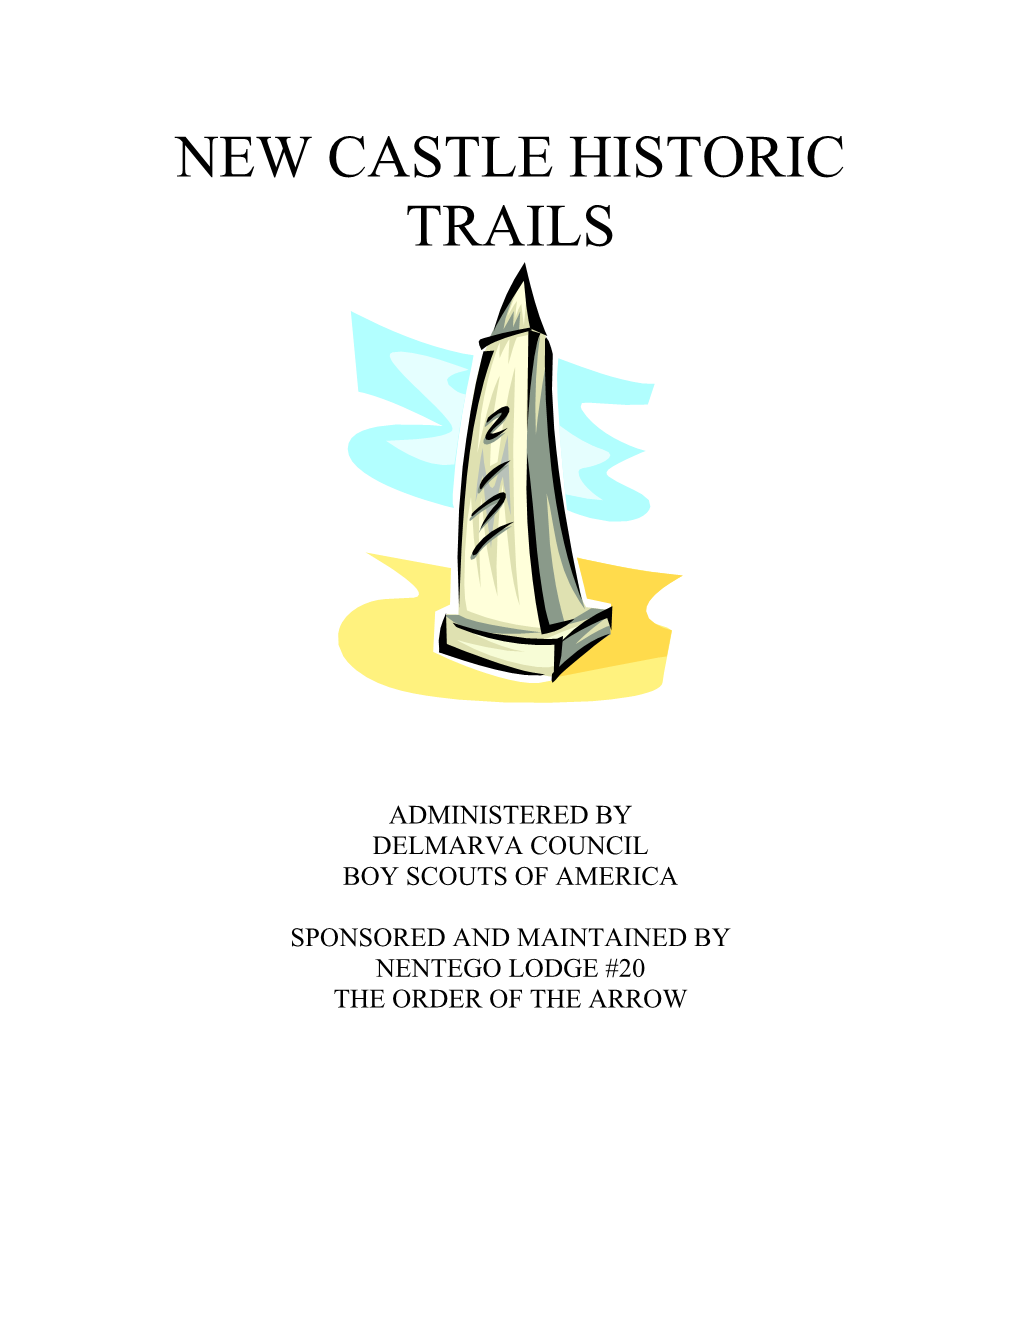 New Castle Historic Trails